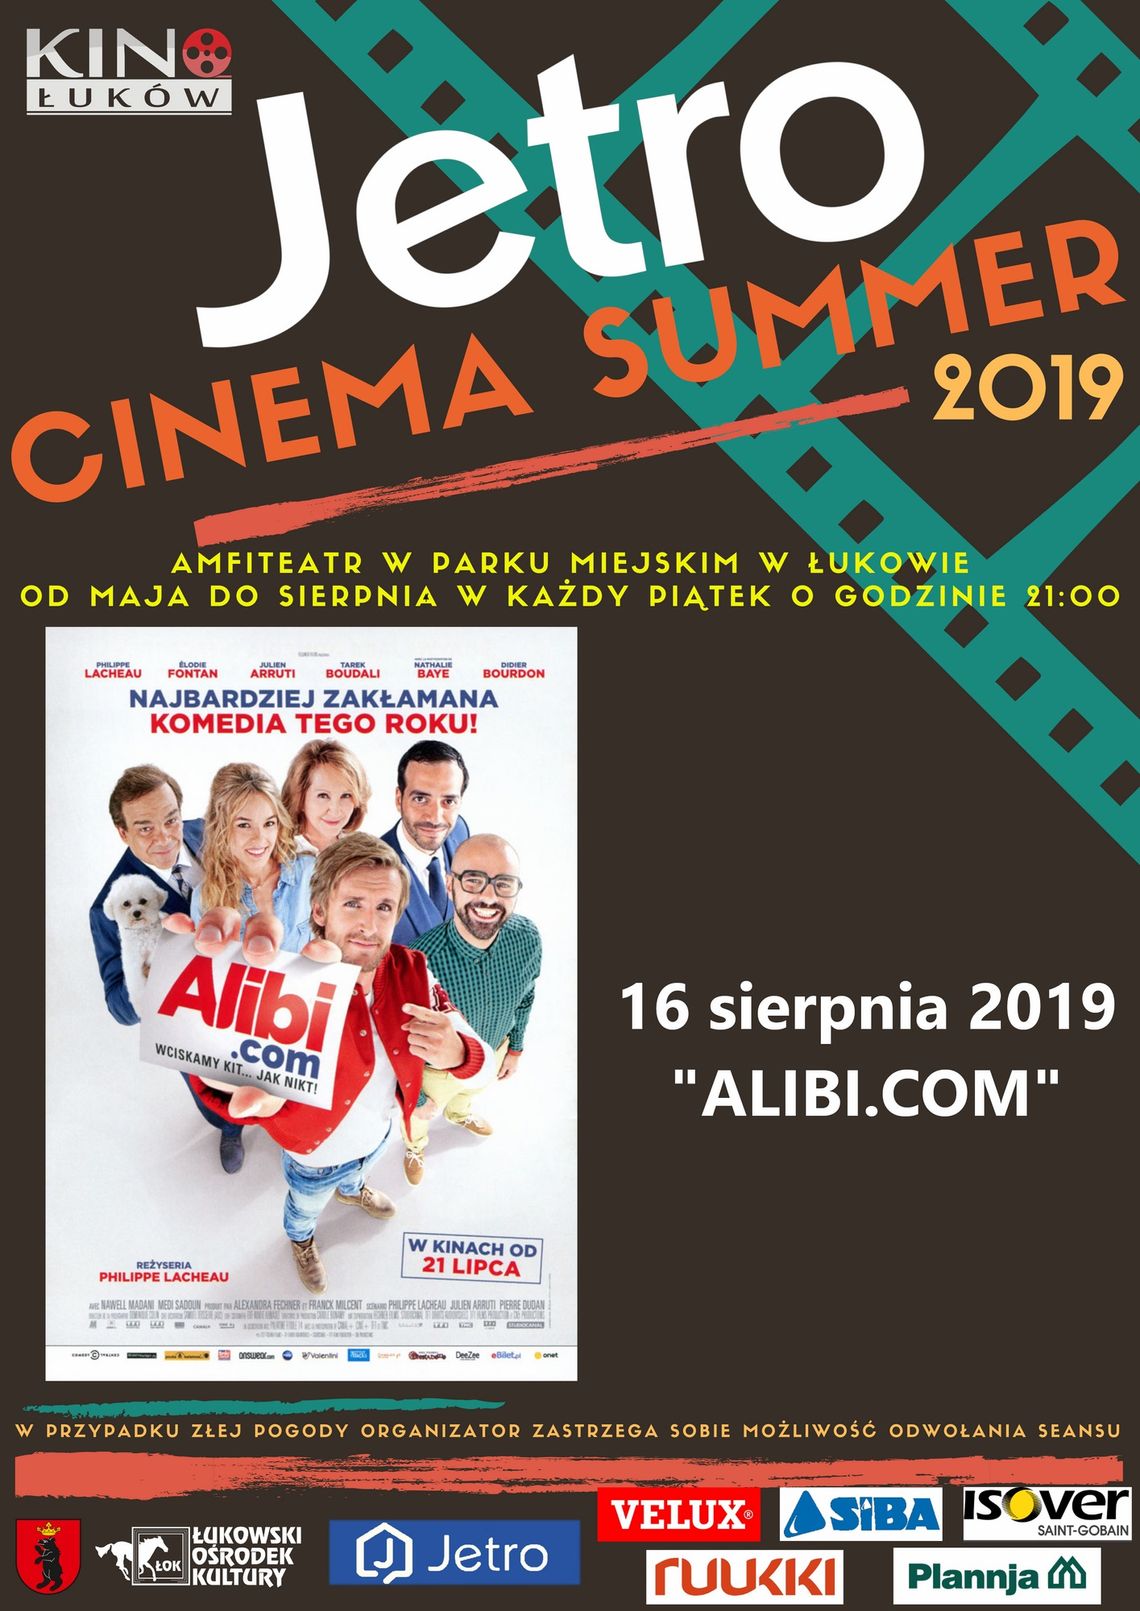 JETRO CINEMA SUMMER - „Alibi.com” /16 sierpnia 2019